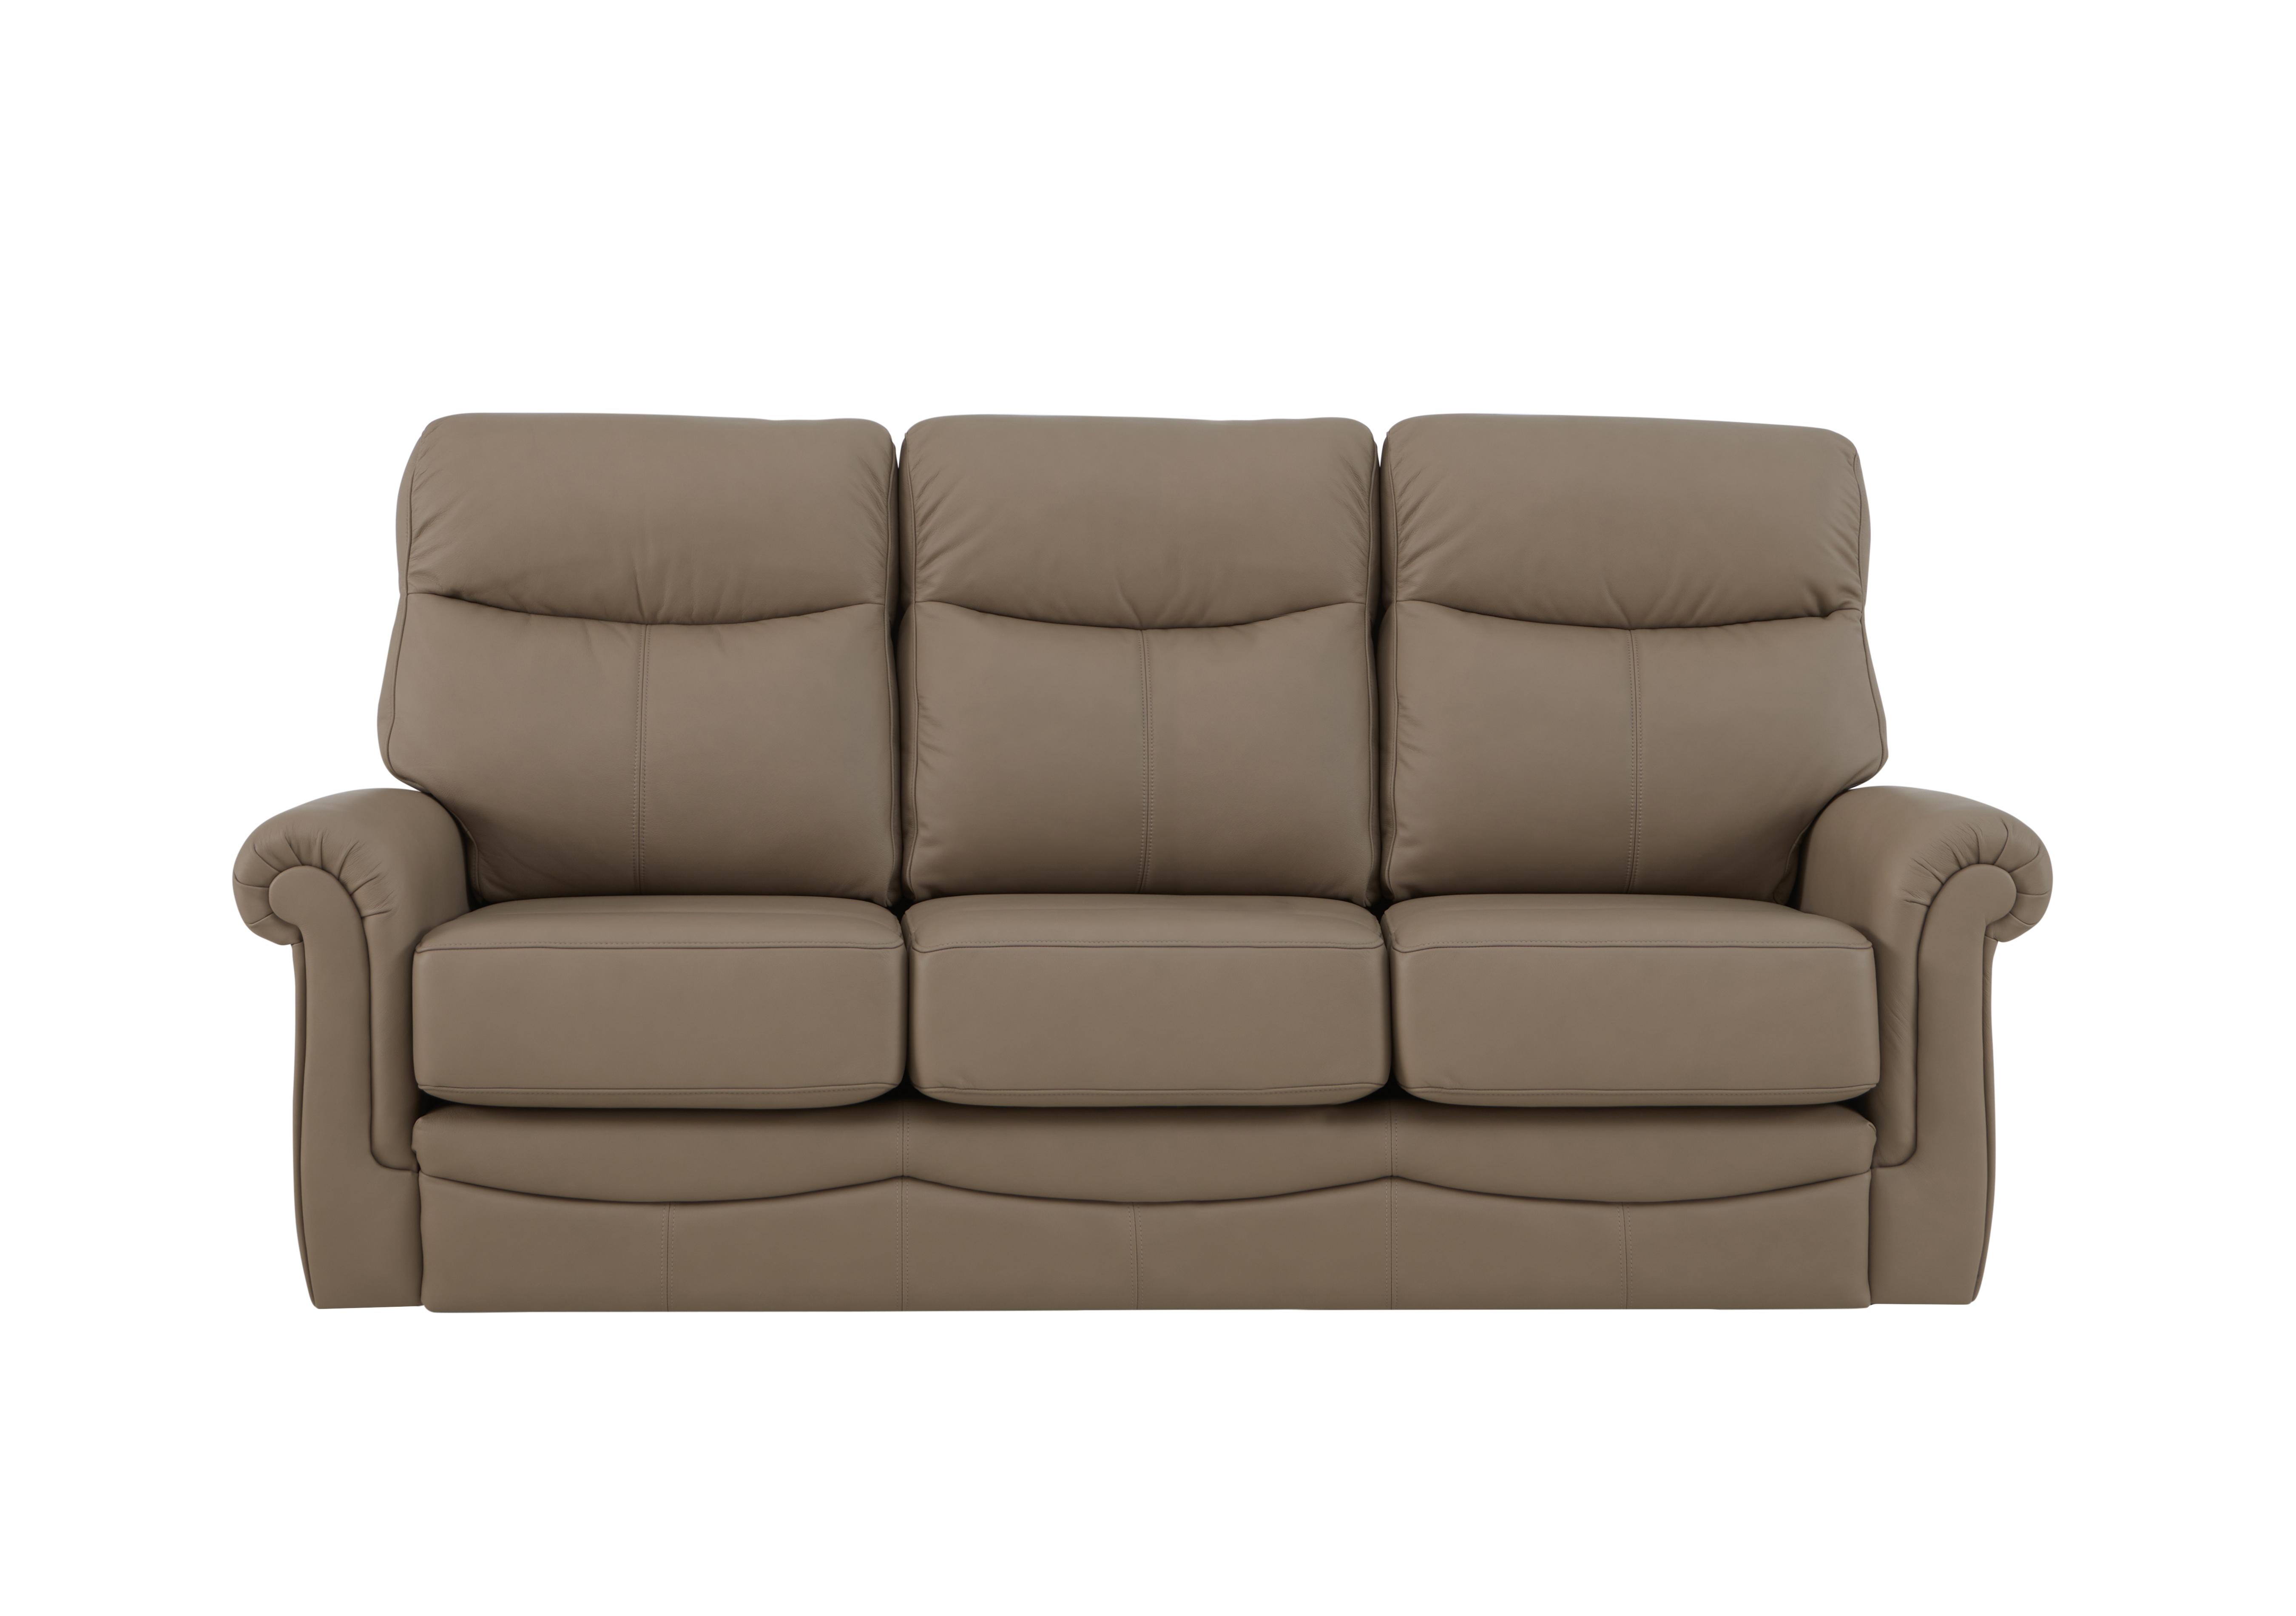 Avon 3 Seater Leather Sofa in L846 Cambridge Taupe on Furniture Village